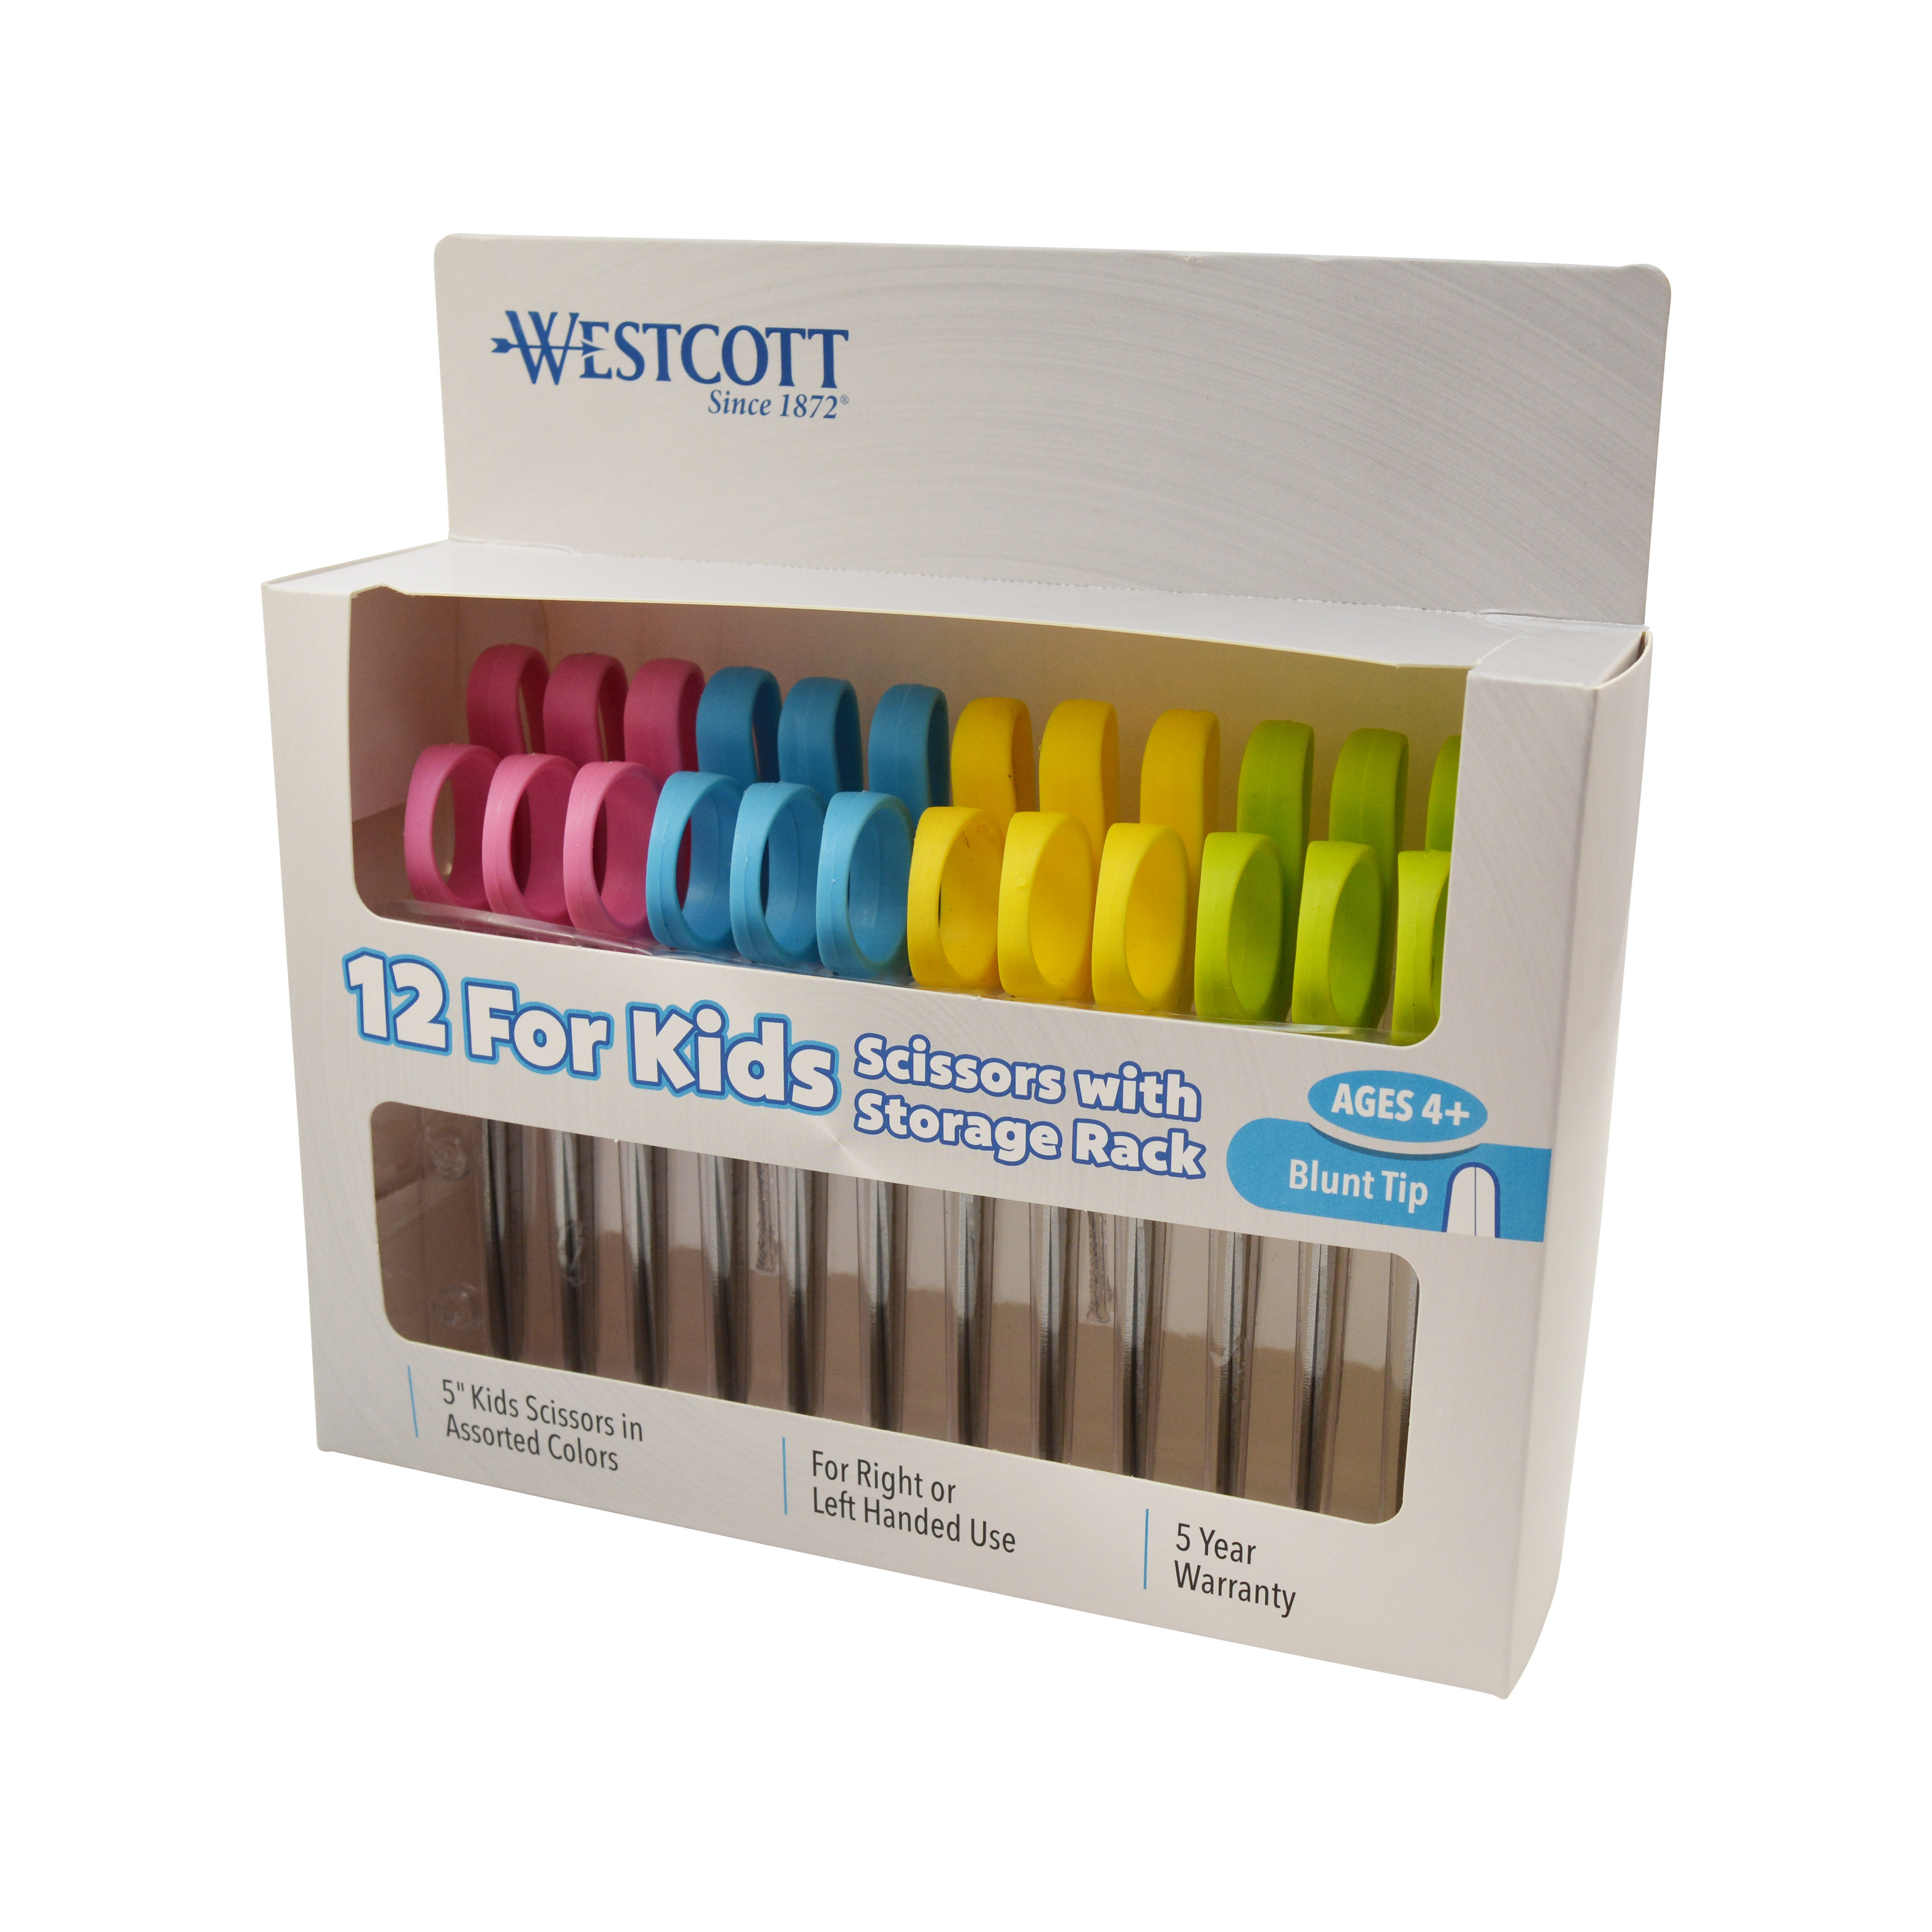 Westcott Kids Blunt Scissors with Storage Rack, 5", Set of 12, Assorted Colors (04252)